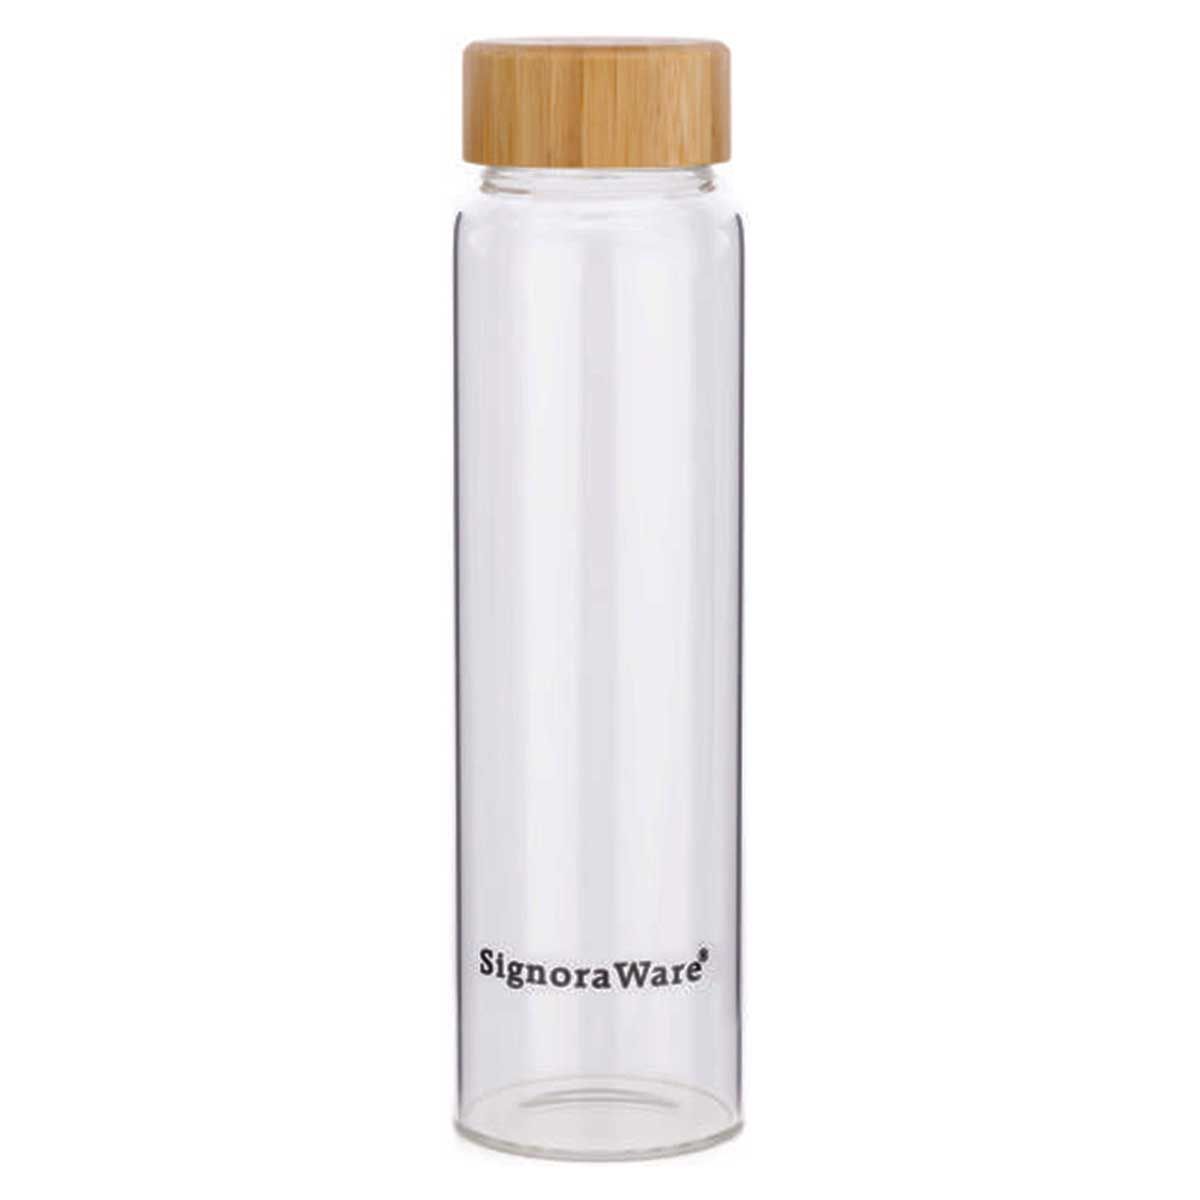 Signoraware Bamboo Glass Bottle 750ml - 1450